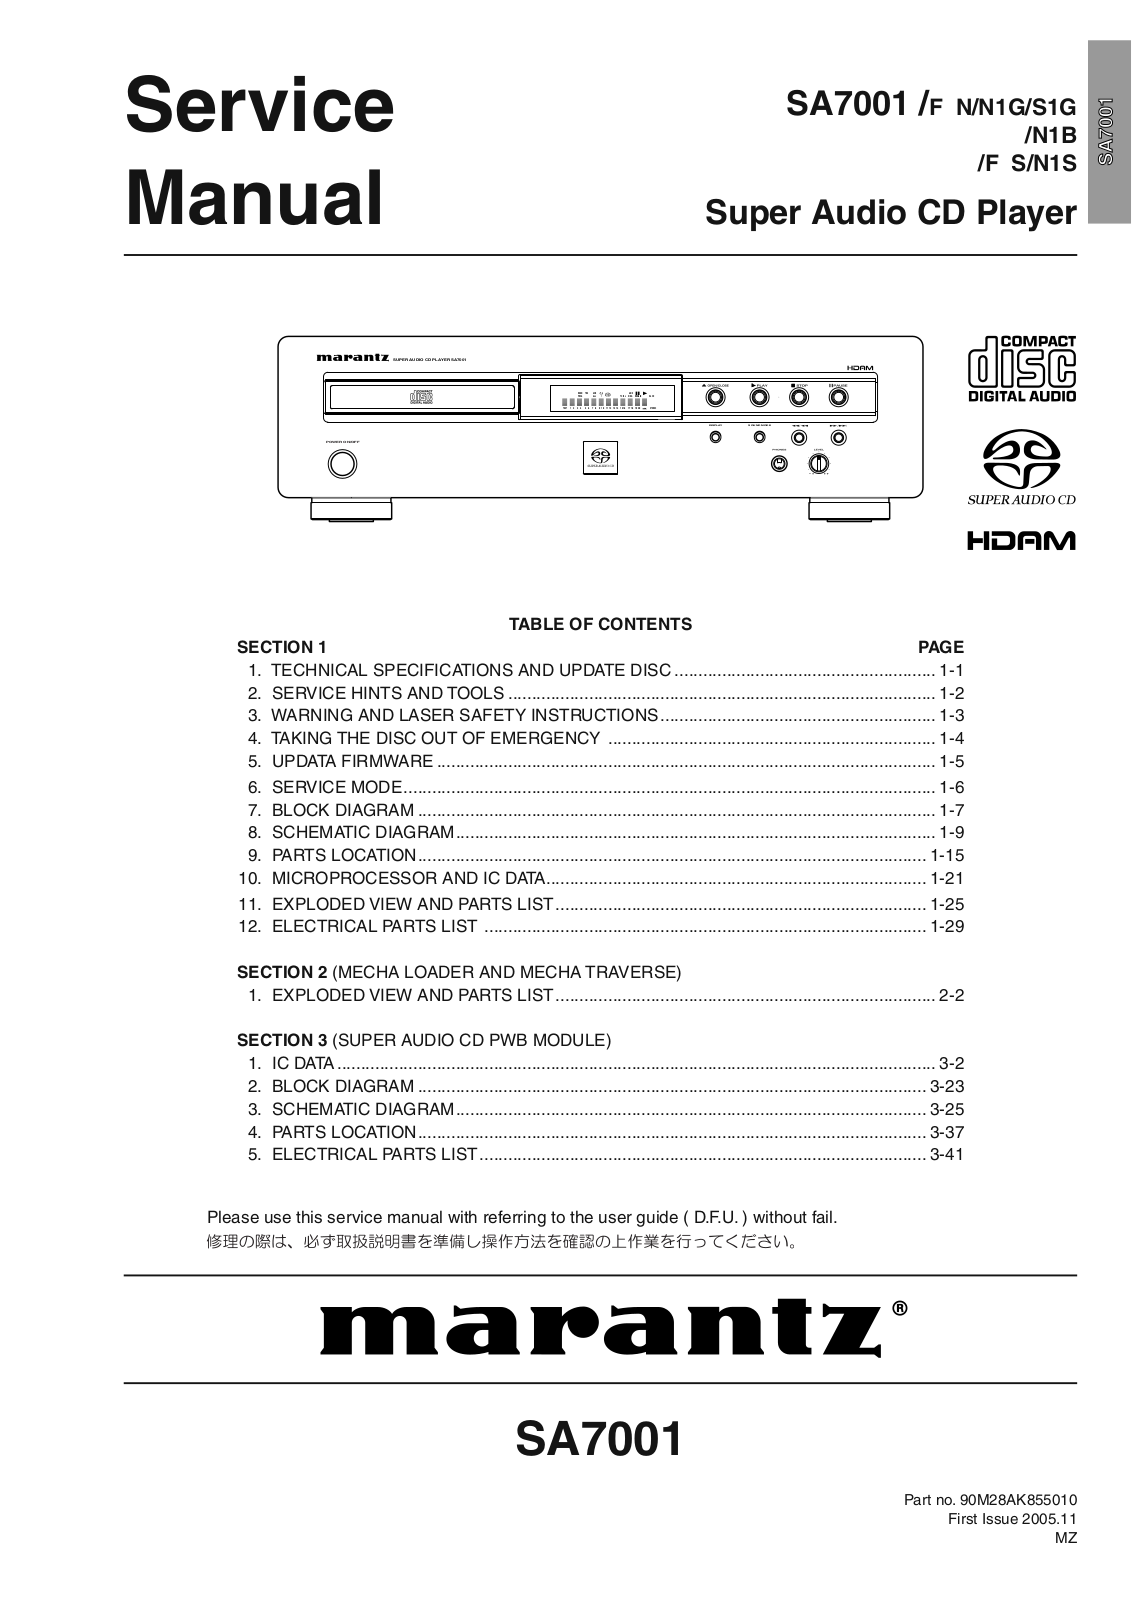 Marantz SA-7001 Service Manual